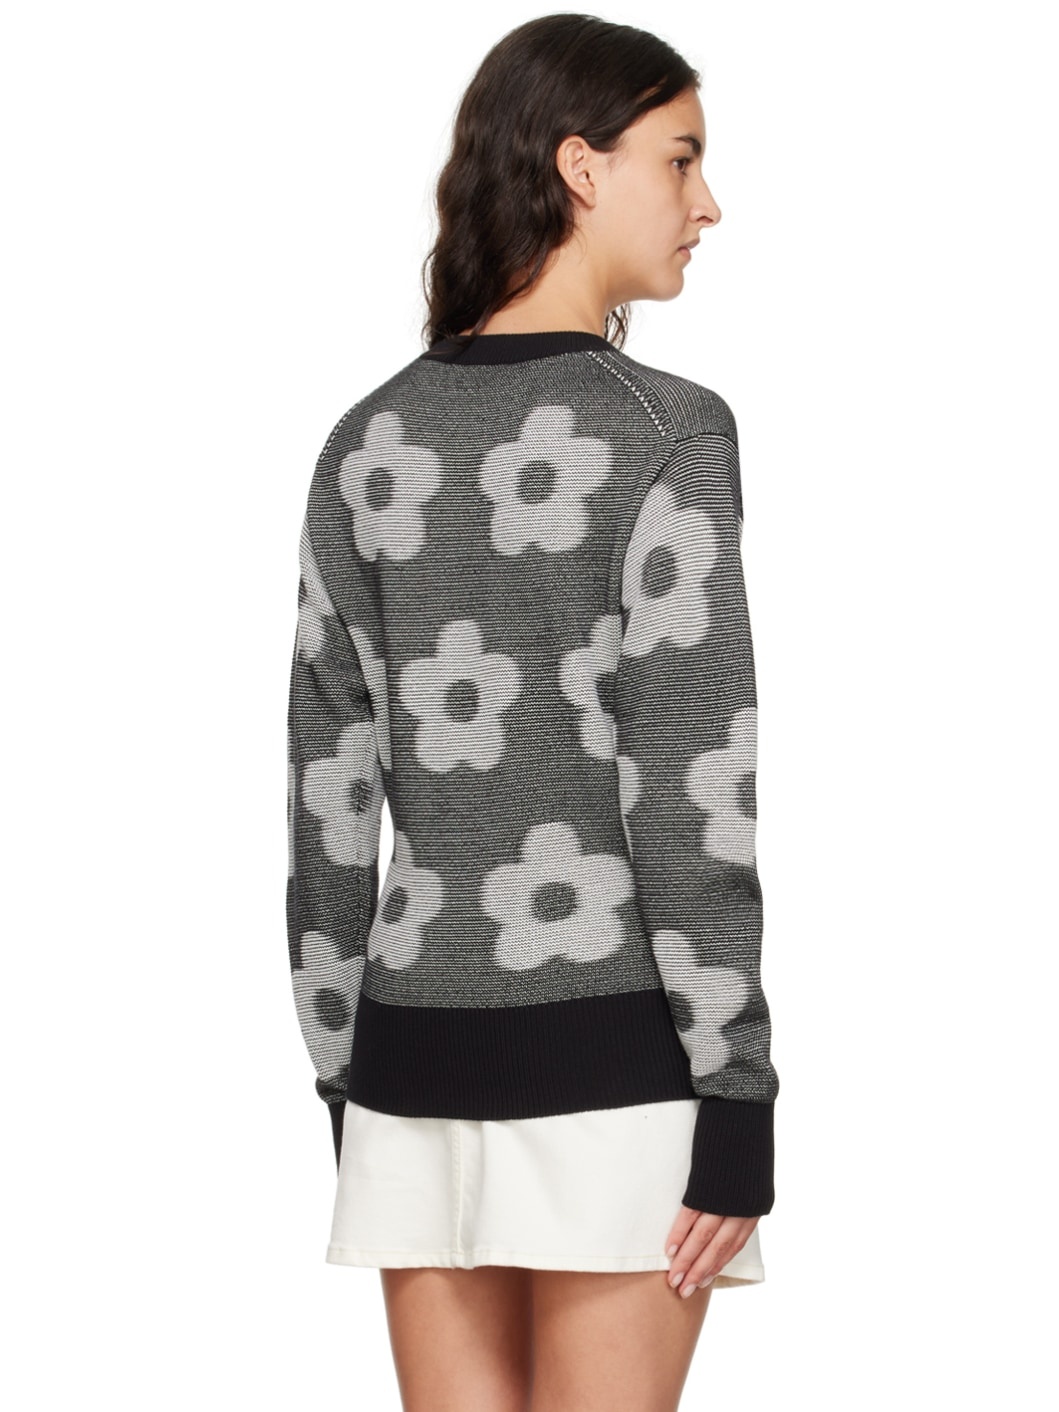 Black & White Kenzo Paris Flower Spot Sweater - 3